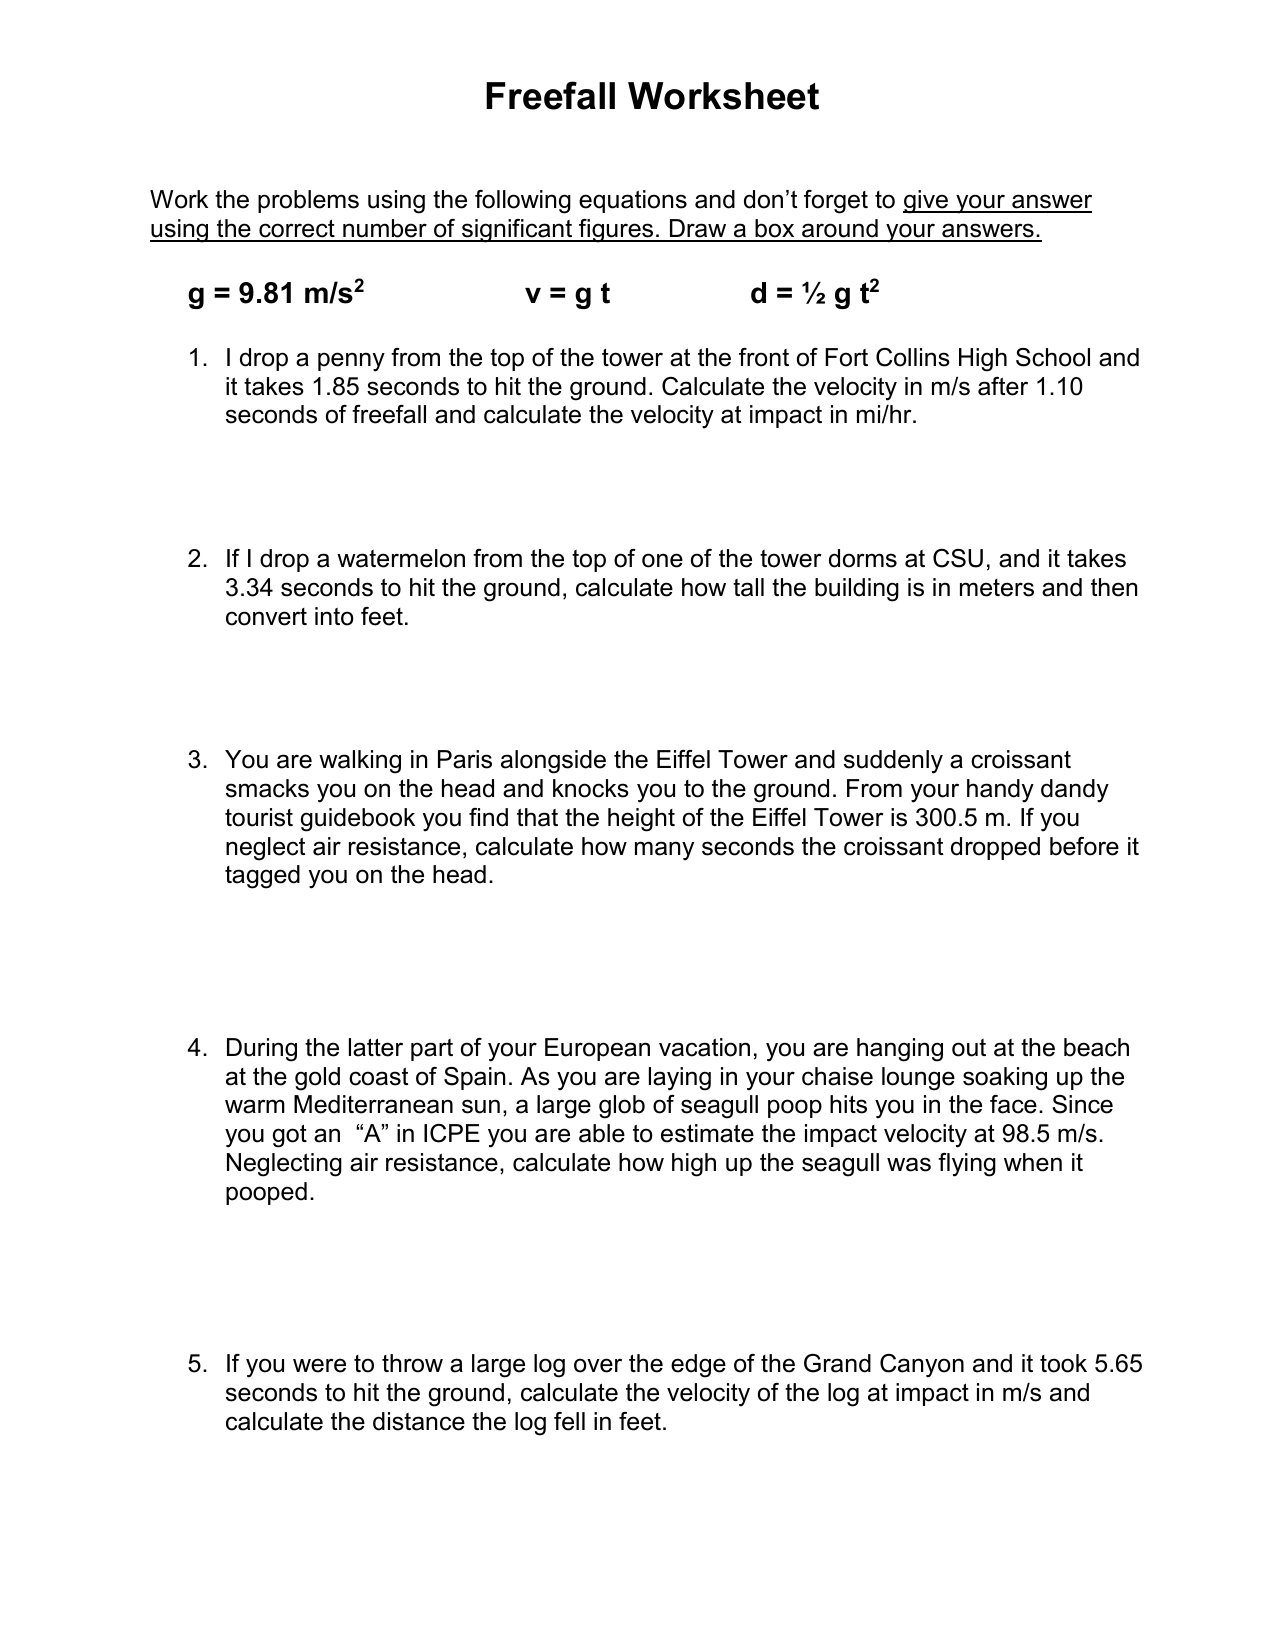 Freefall Worksheet (22) Inside Free Fall Worksheet Answers